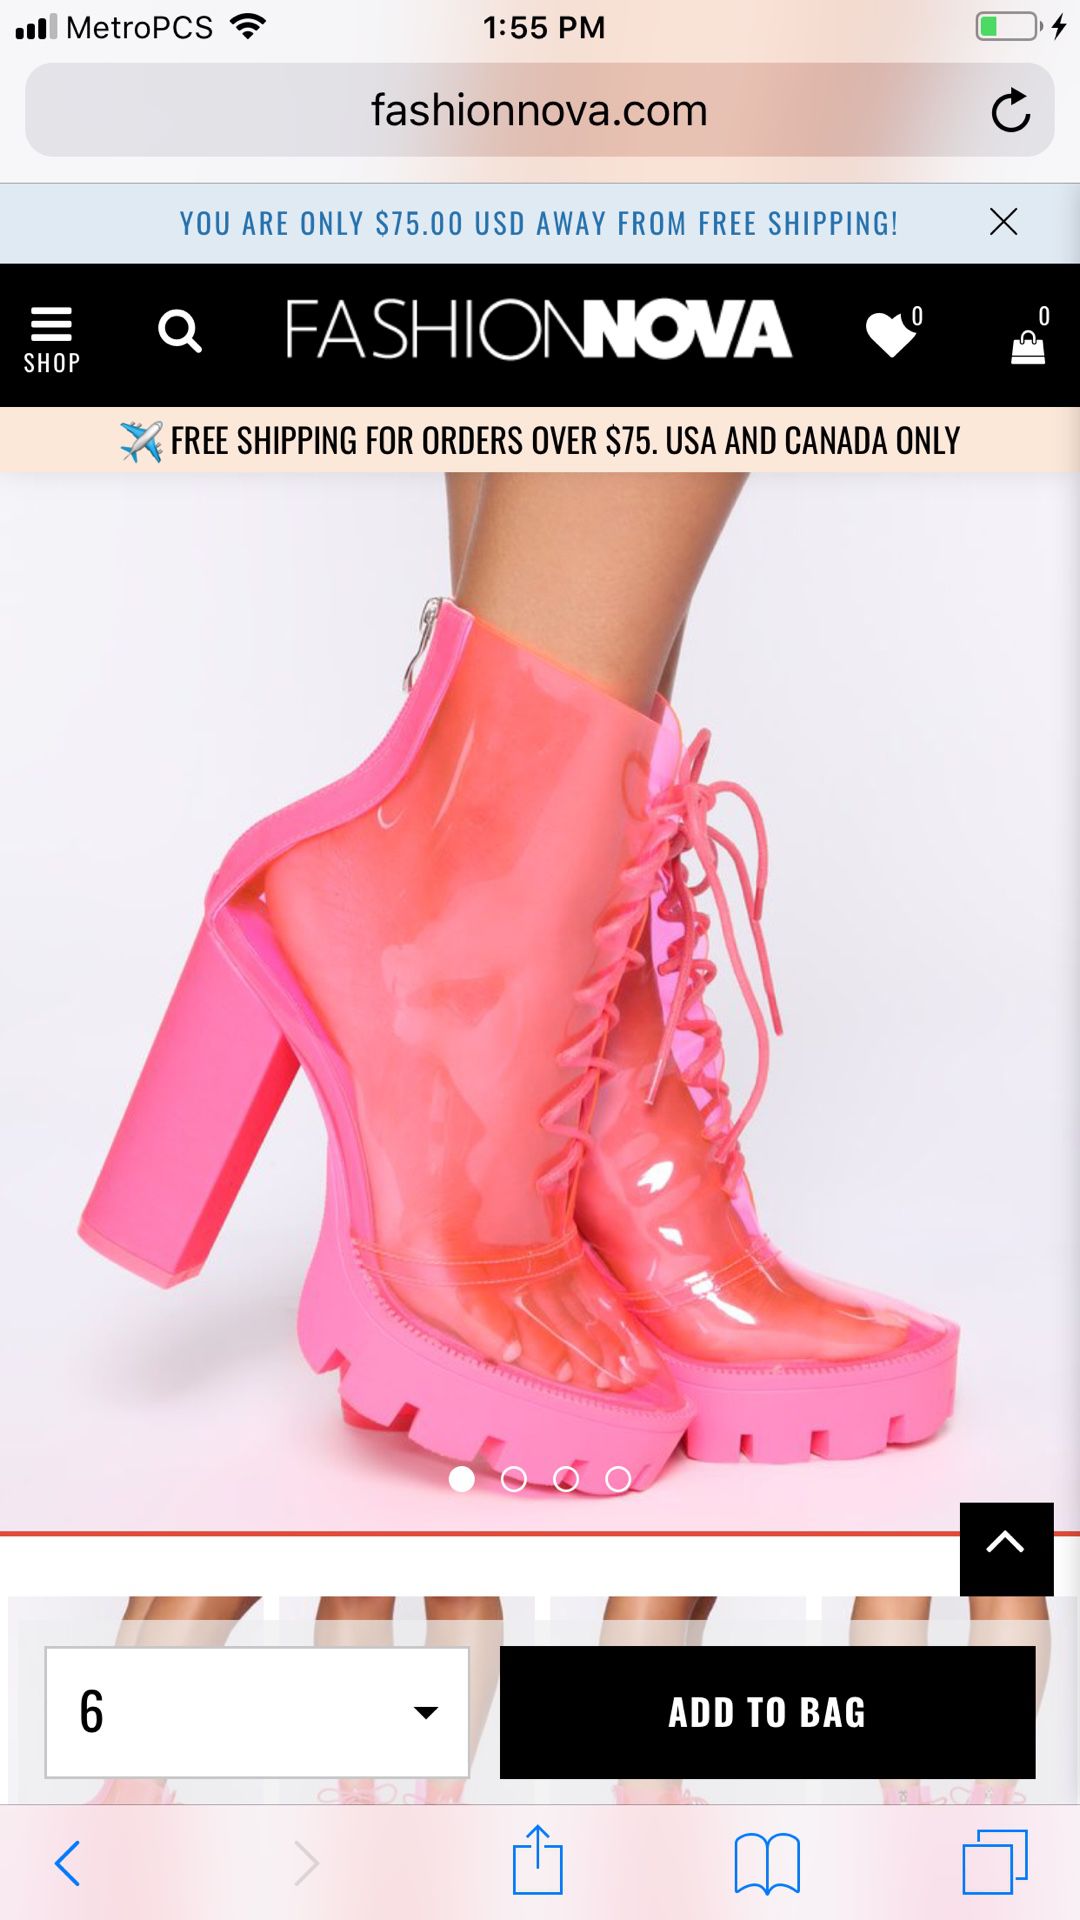 Brand New in Box* Hot Pink Booties/Boots Halloween Costume Fun Fashion Nova 8.5